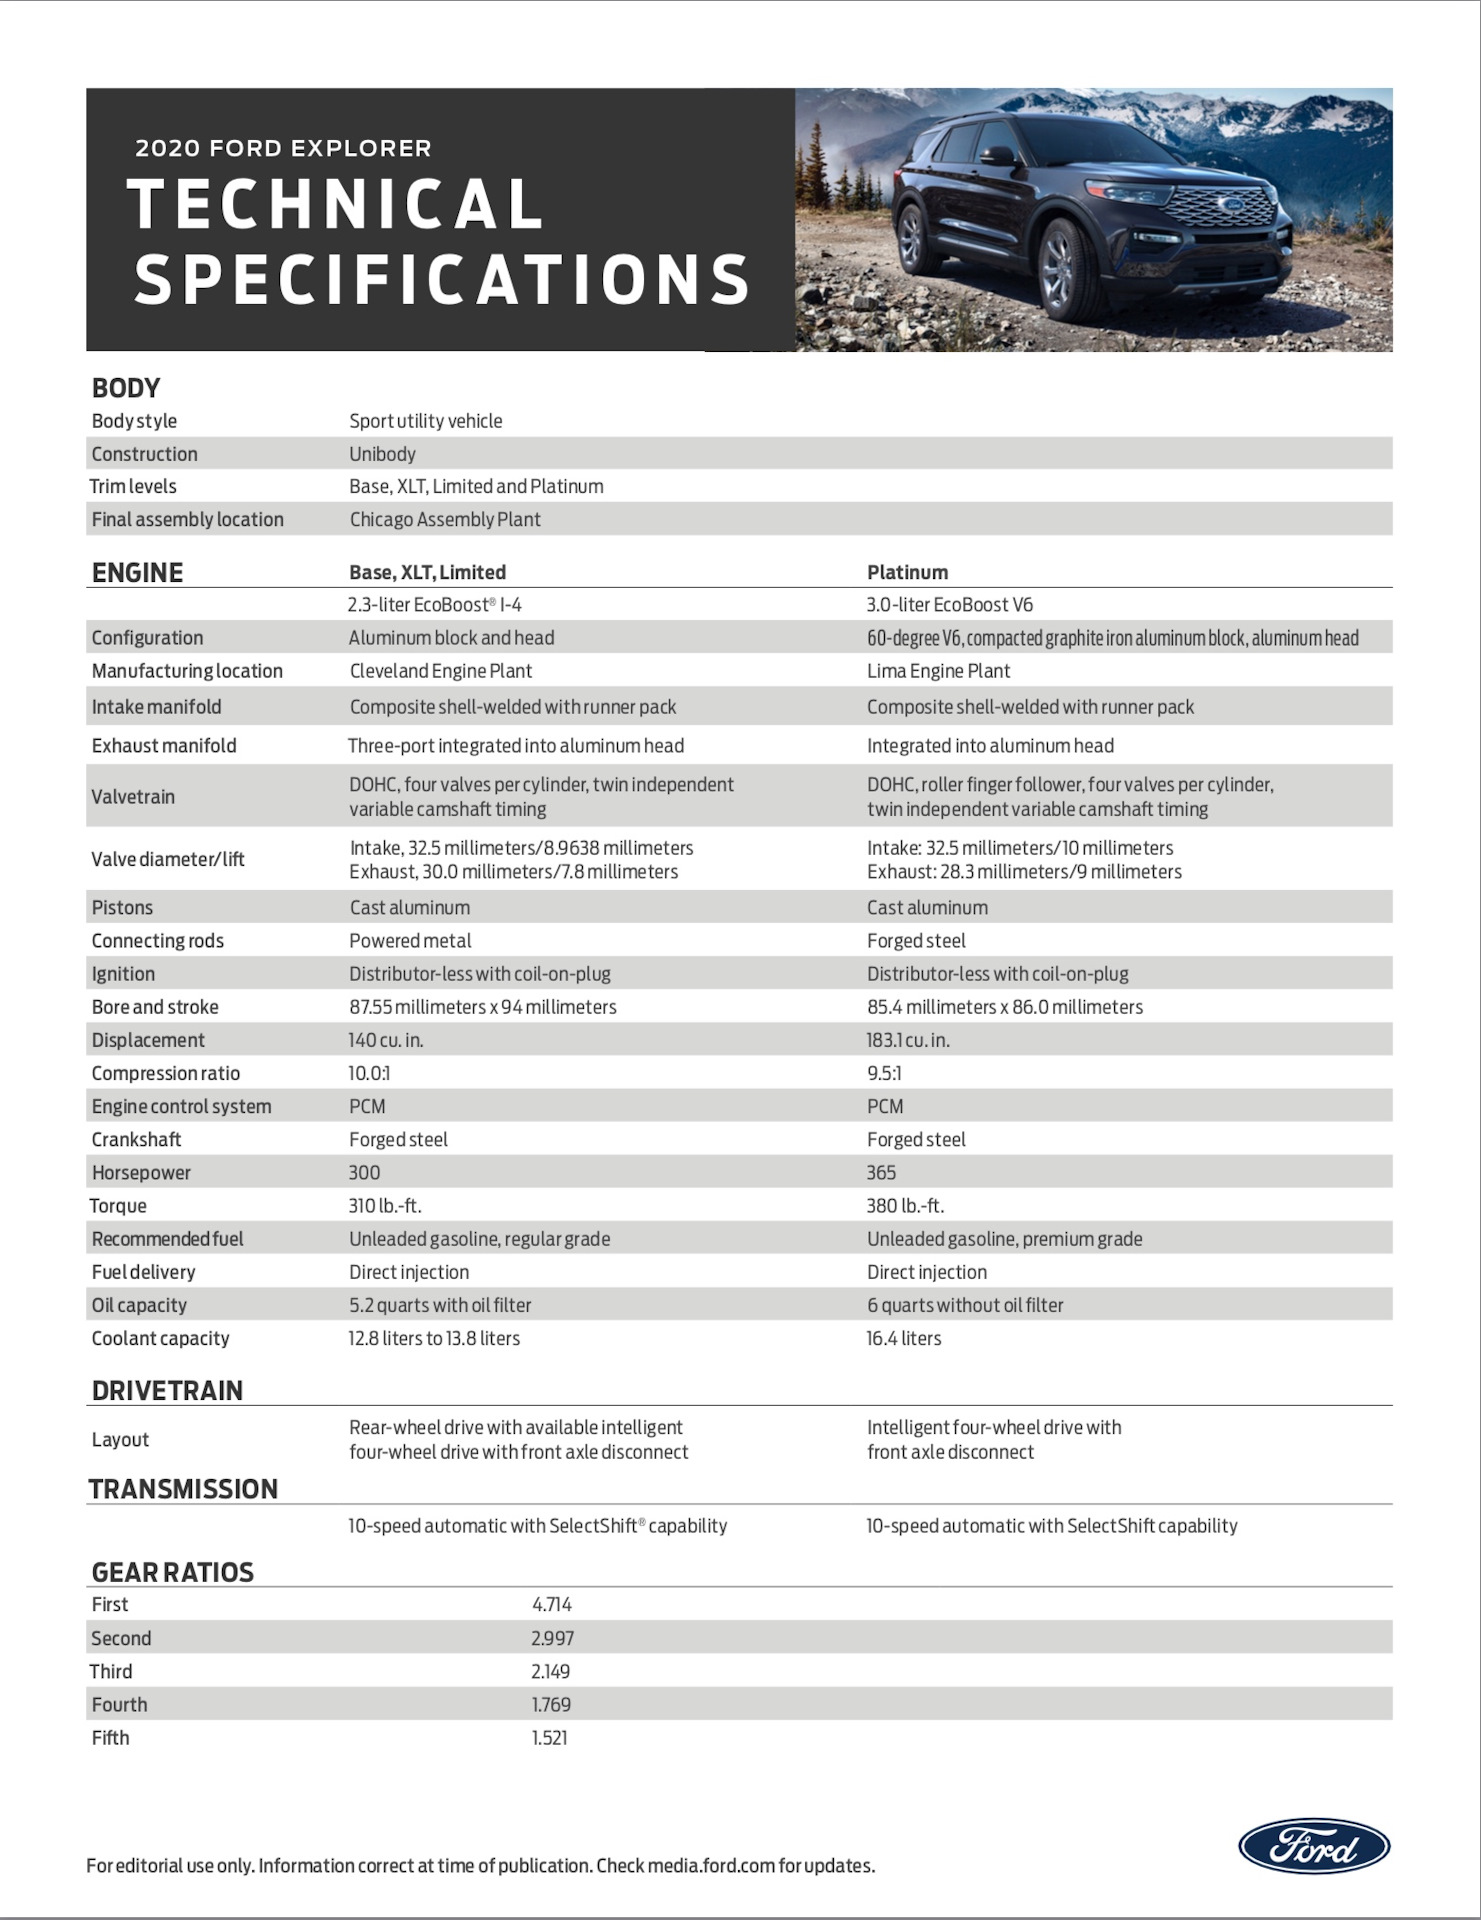 Автомобили форд характеристика. Форд эксплорер 2020 характеристики технические.